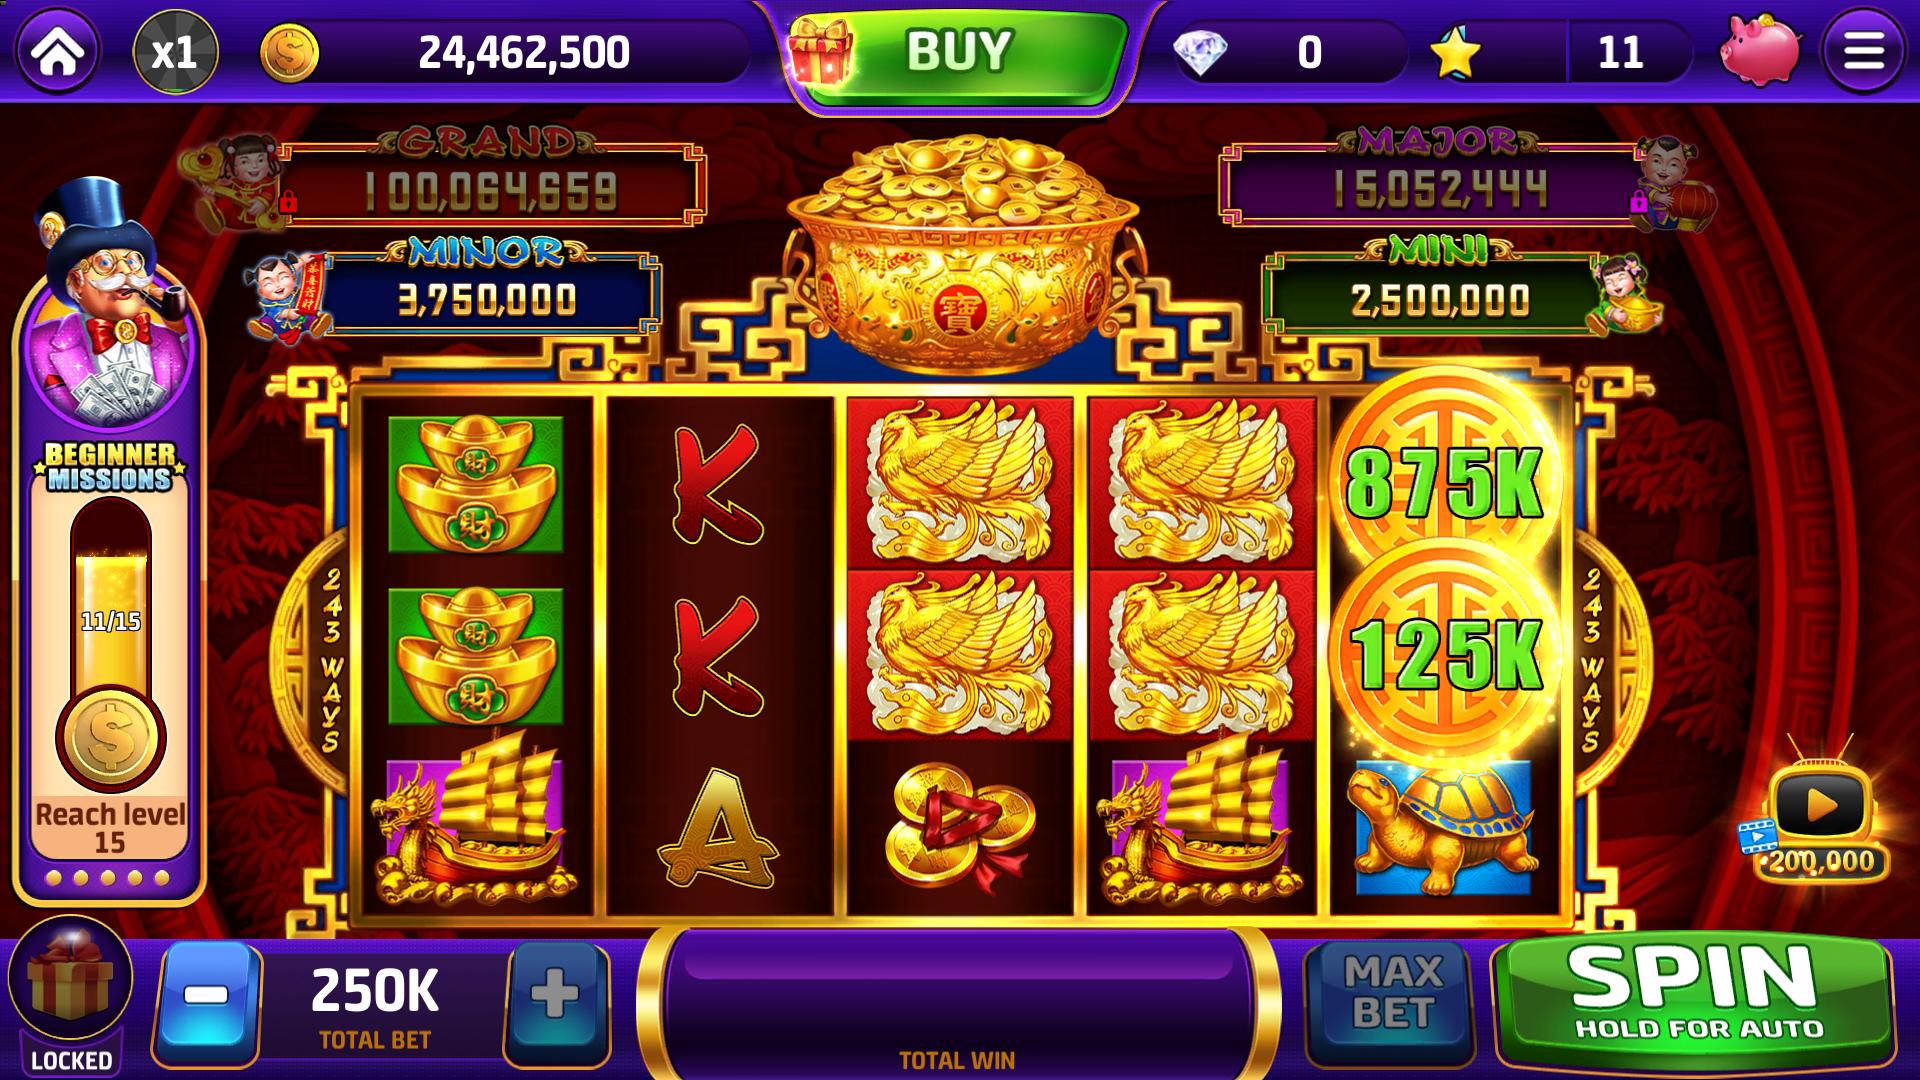 Triple Win Slots Pop Vegas Casino Slots 1.41 Screenshot 21